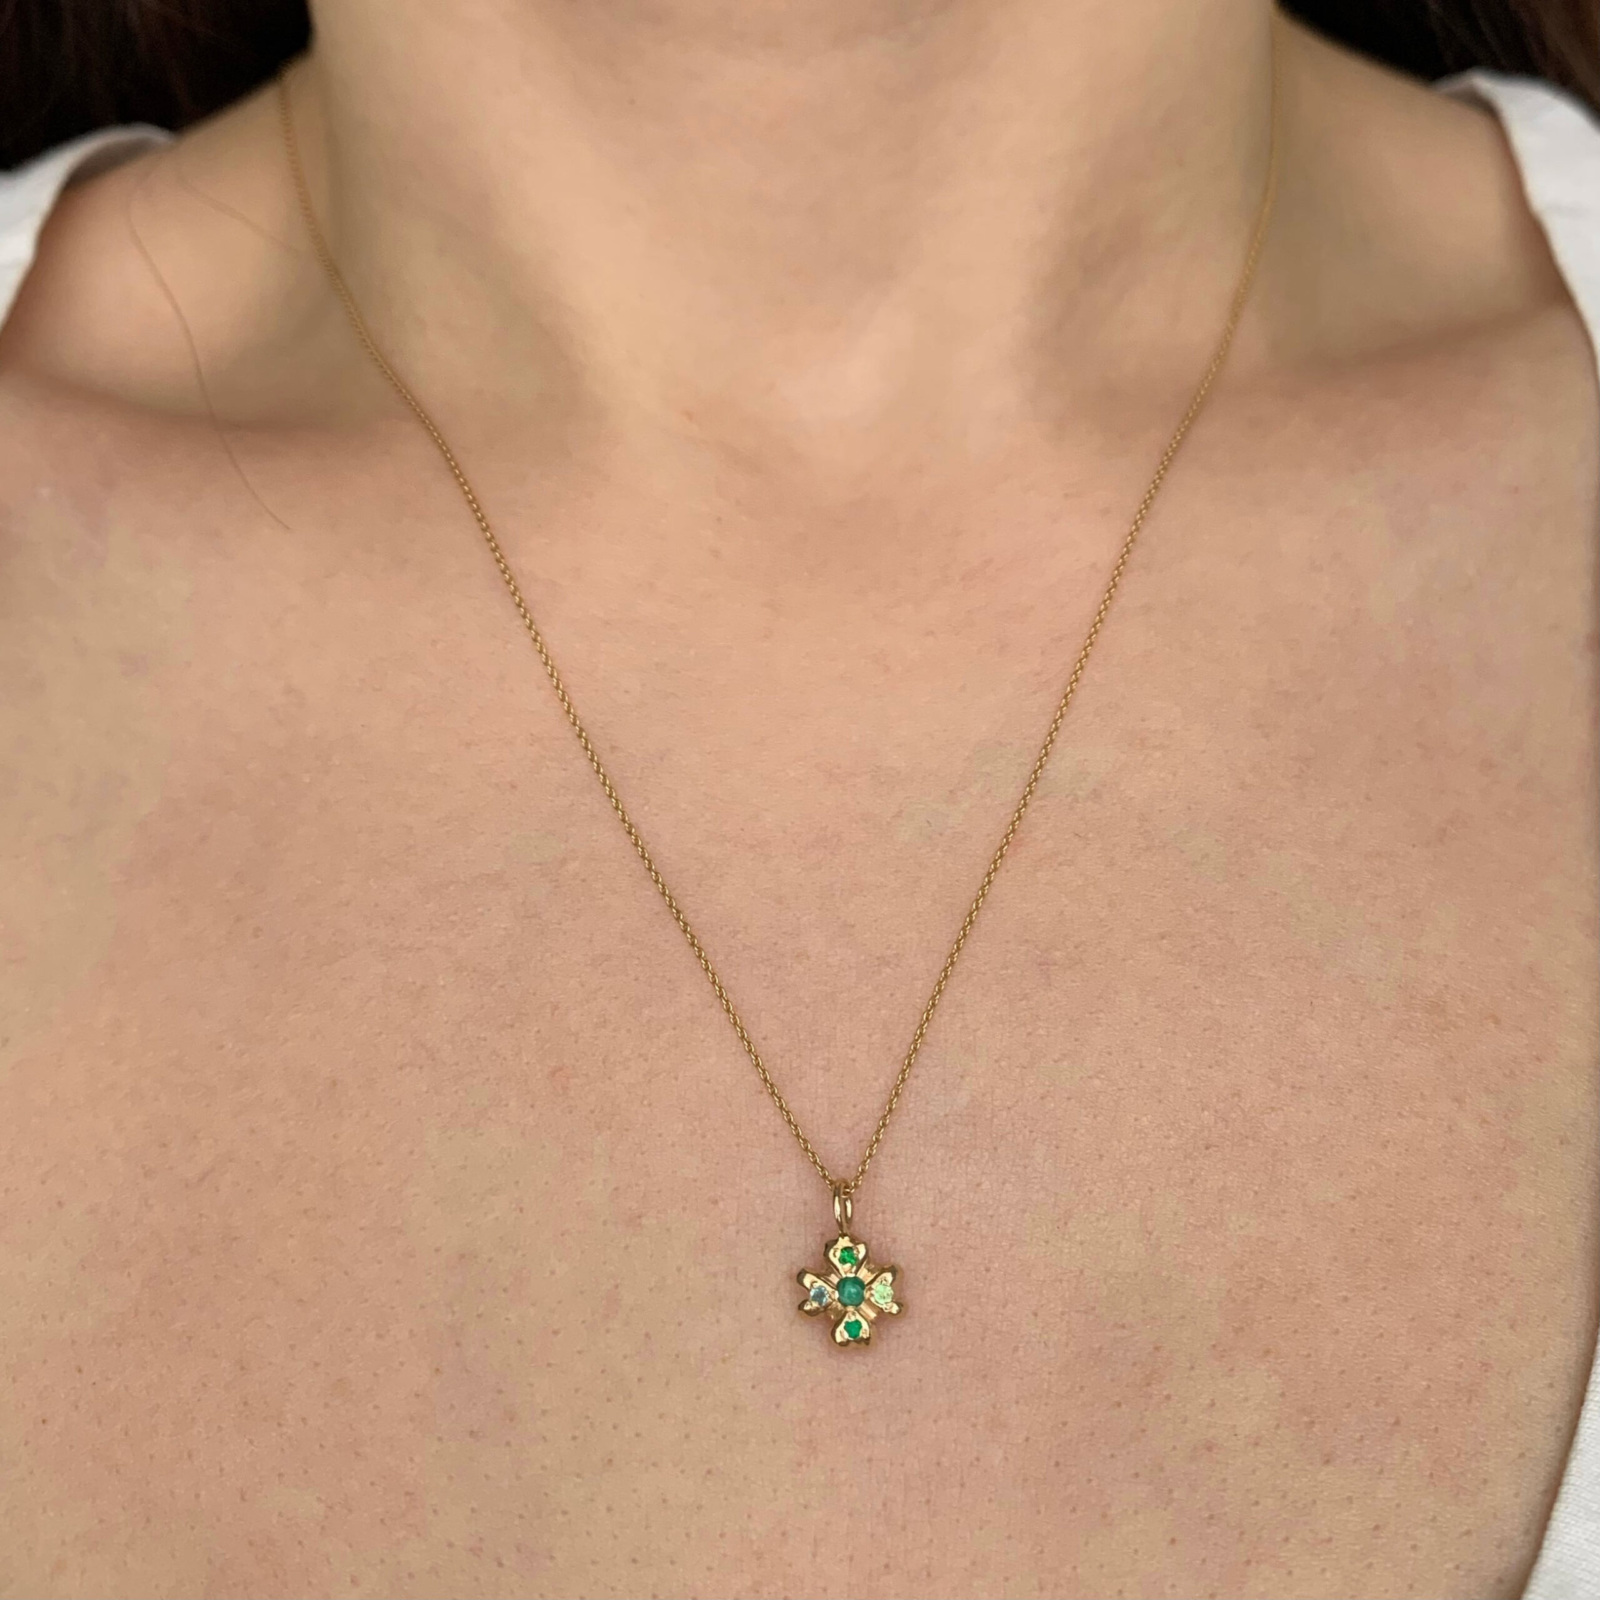 lucky clover charm necklace